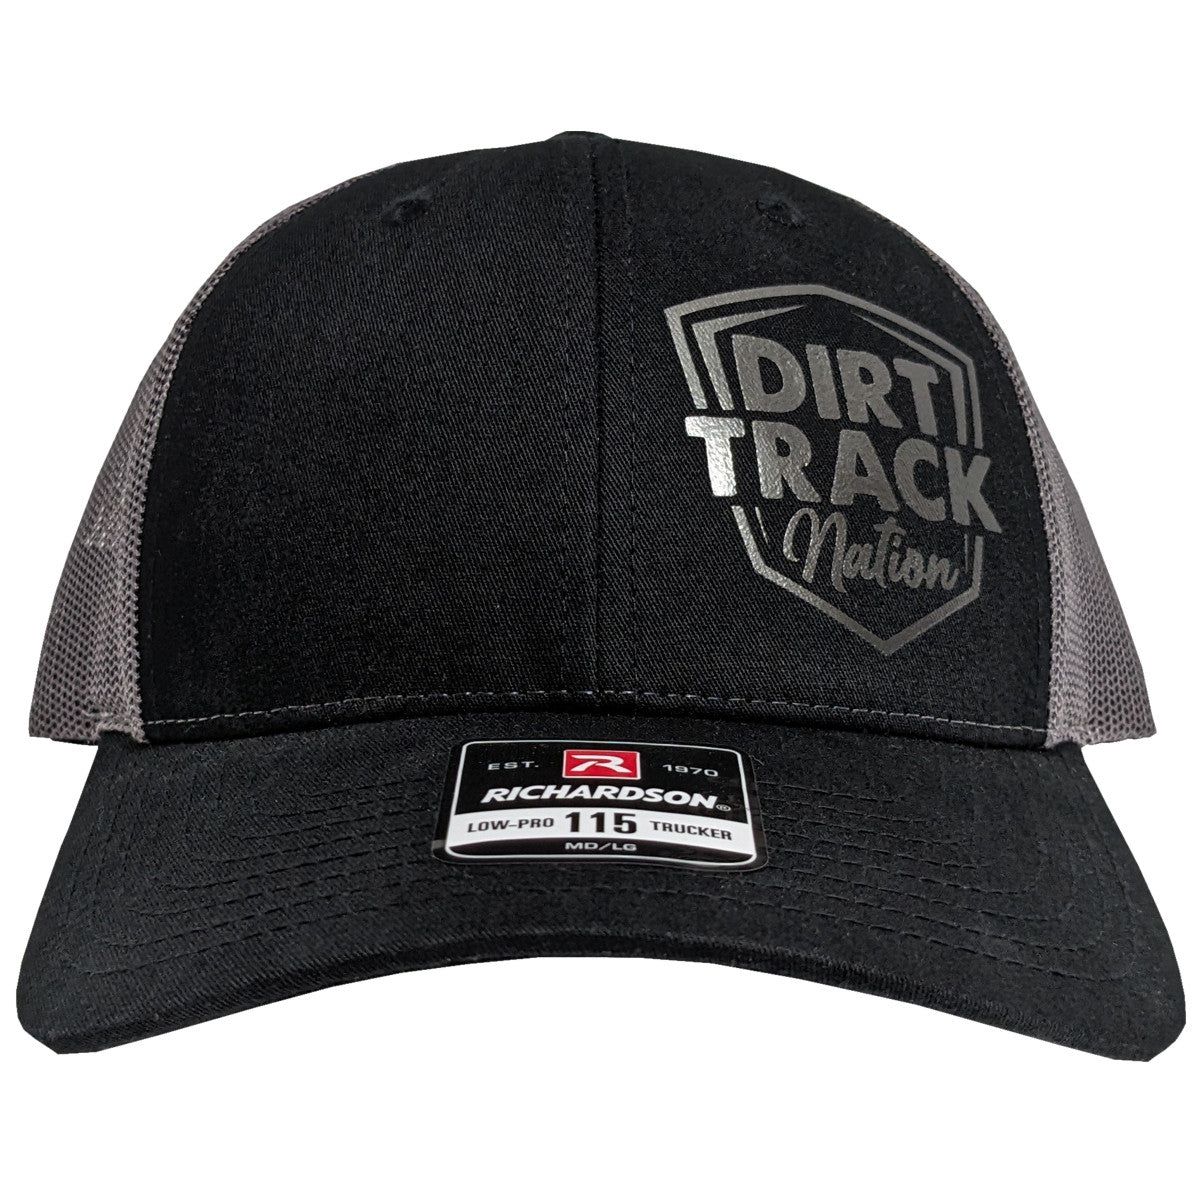 Dirt Track Nation Black W/ Charocal Mesh Hat